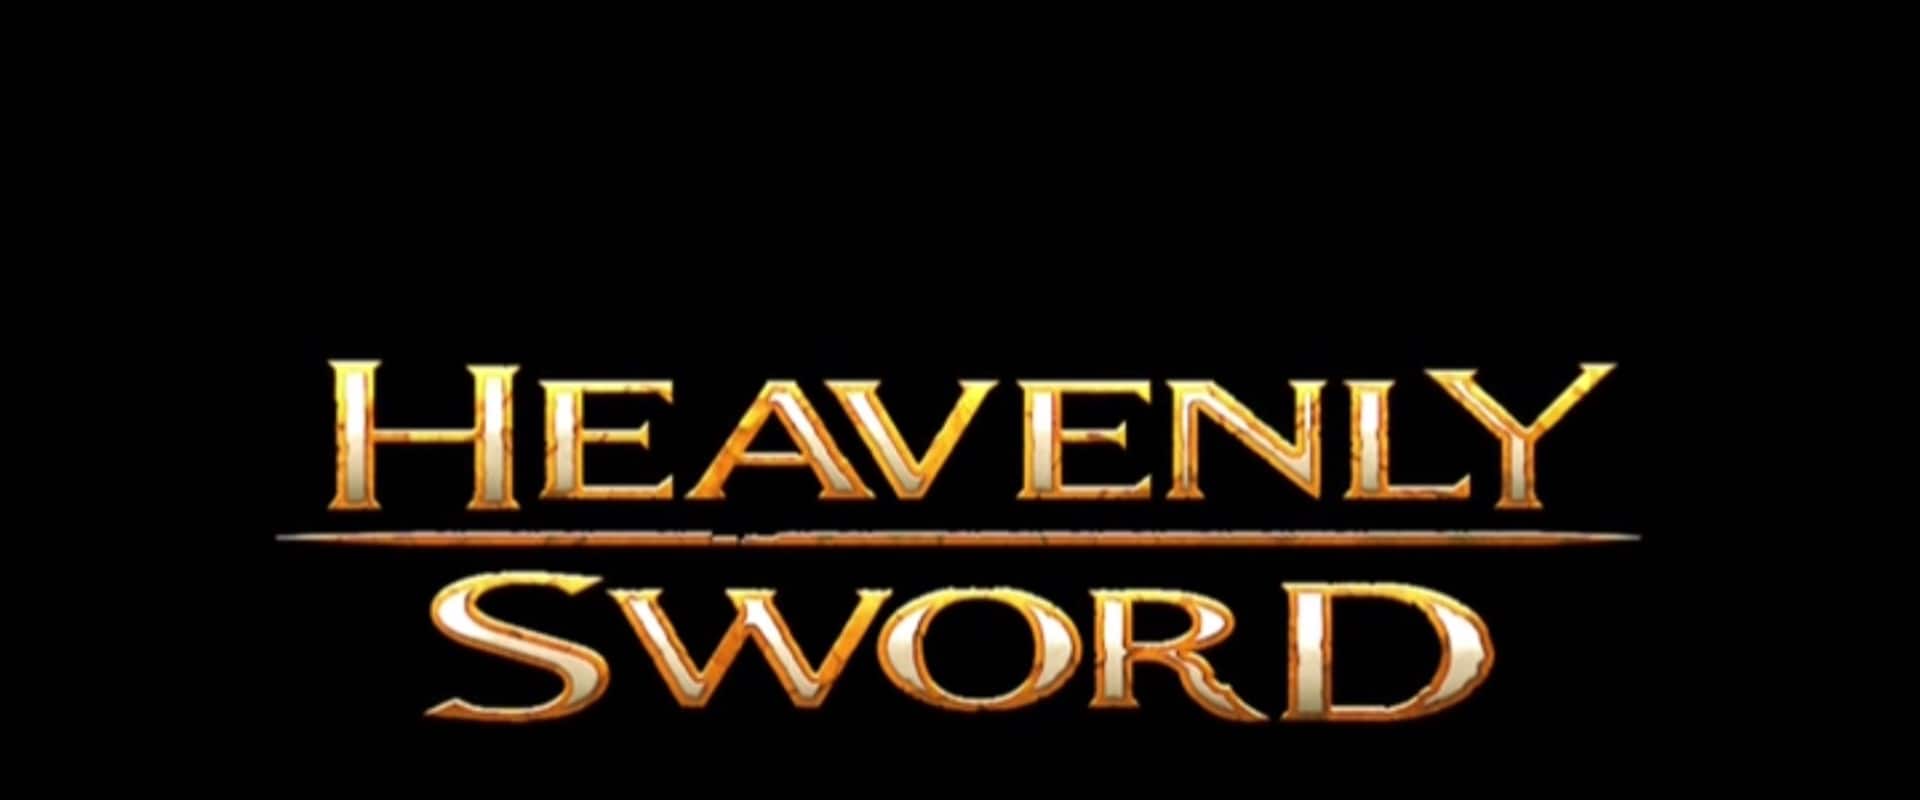 Heavenly Sword background 1